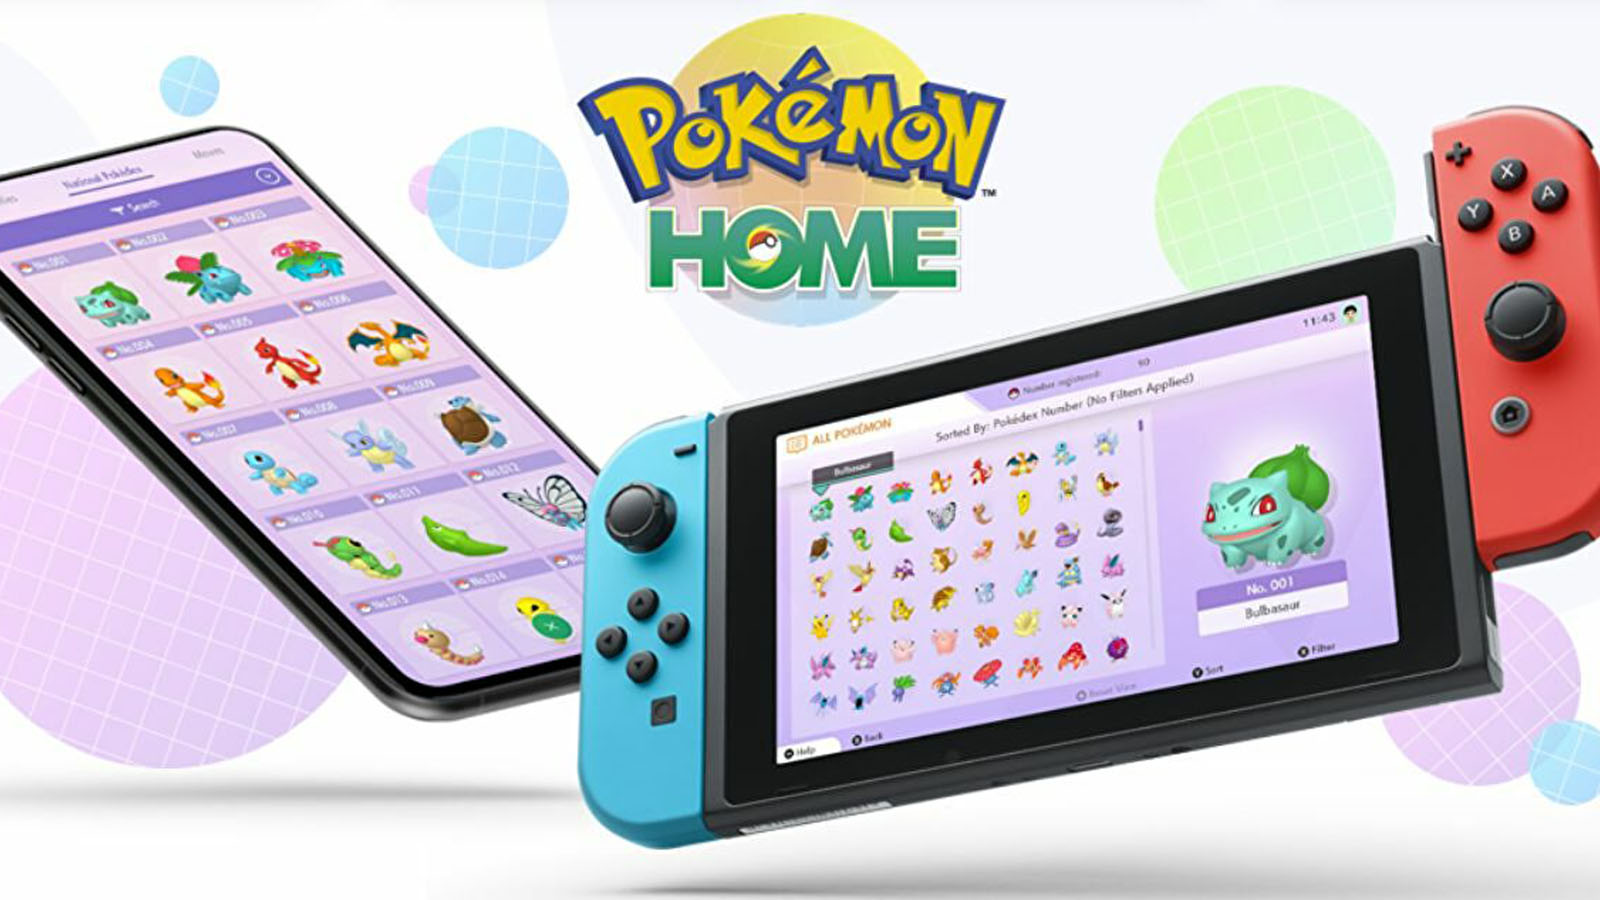 The latest core series Pokémon games by Nintendo, Pokémon Sword and